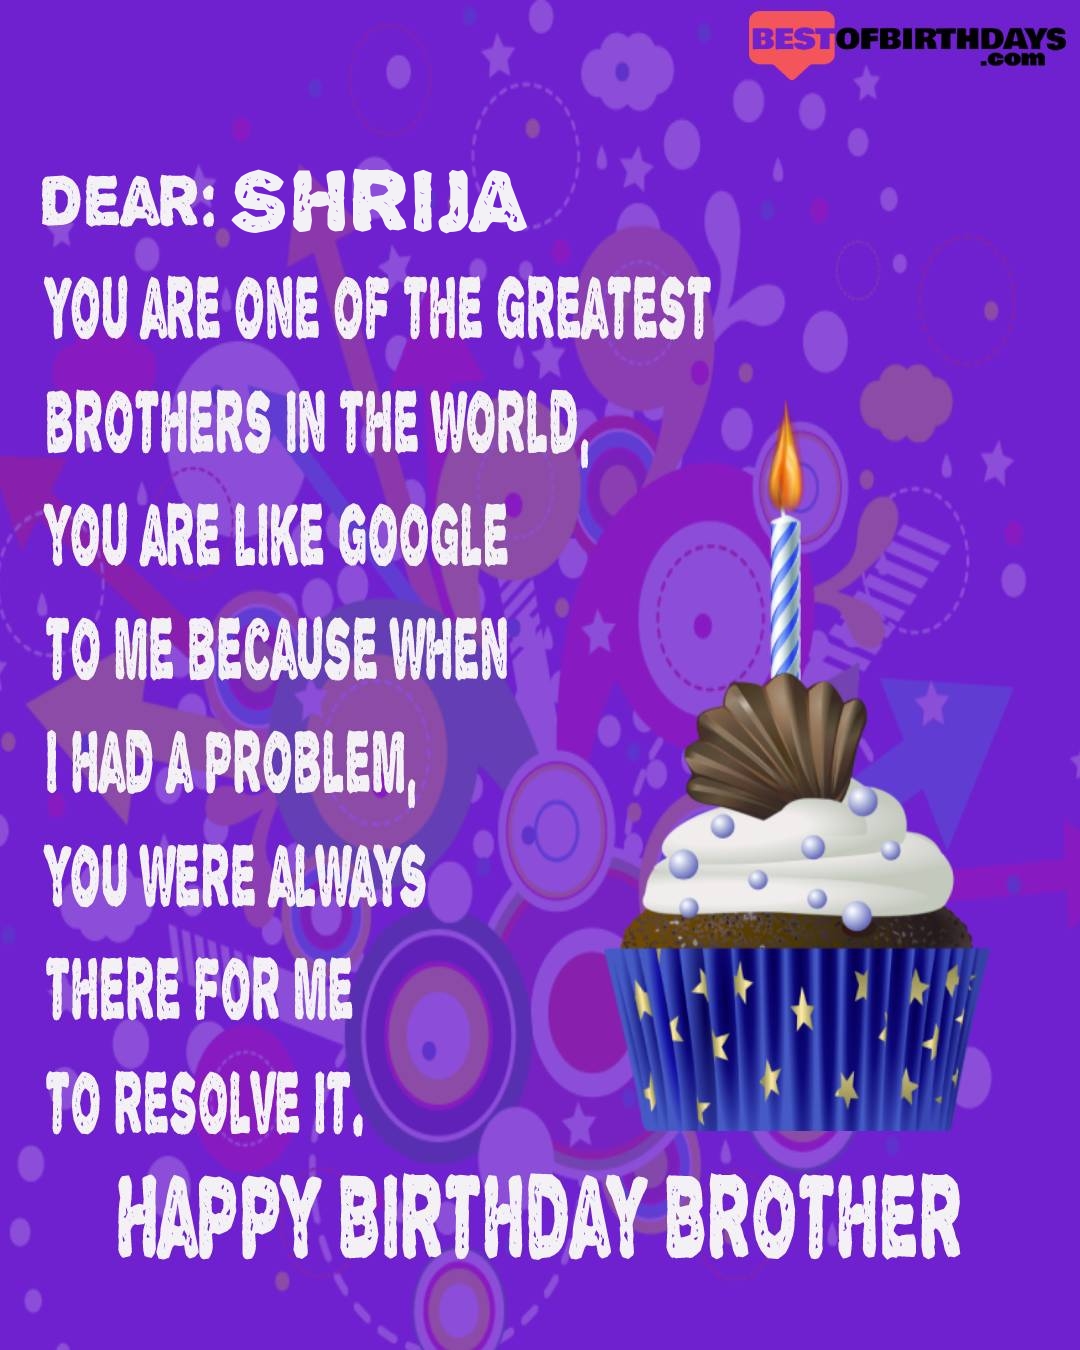 Happy birthday shrija bhai brother bro